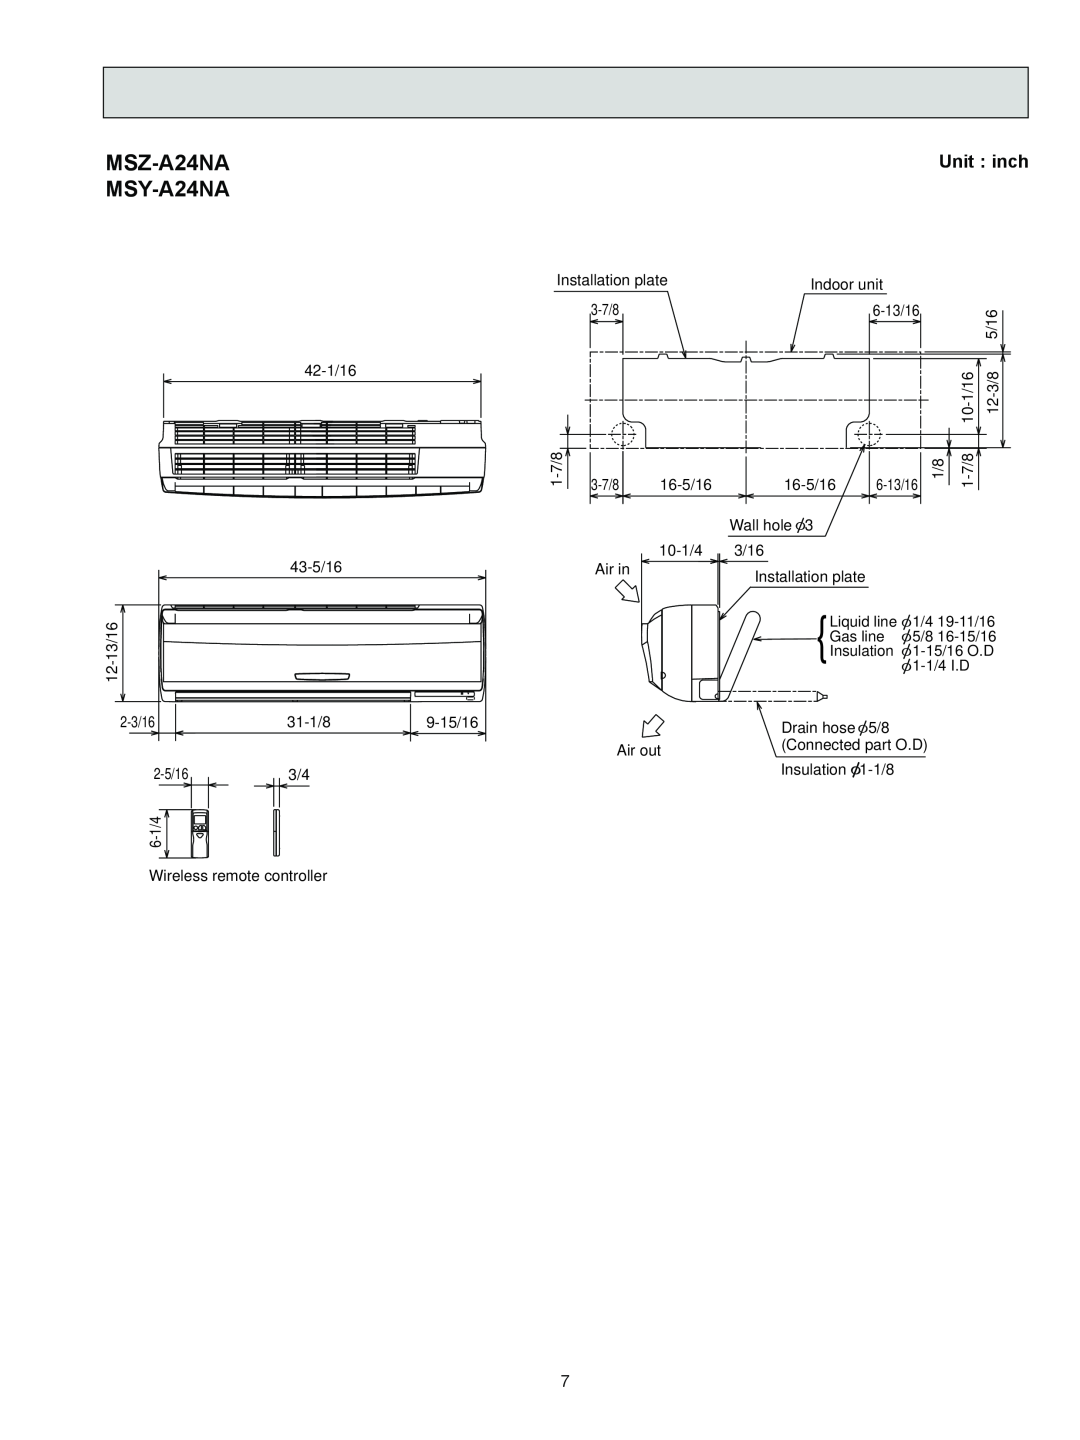 Logitech MSZ-A09NA, OB450 REVISED EDITION-B service manual MSZ-A24NA, MSY-A24NA, Unit inch, Installation plate 